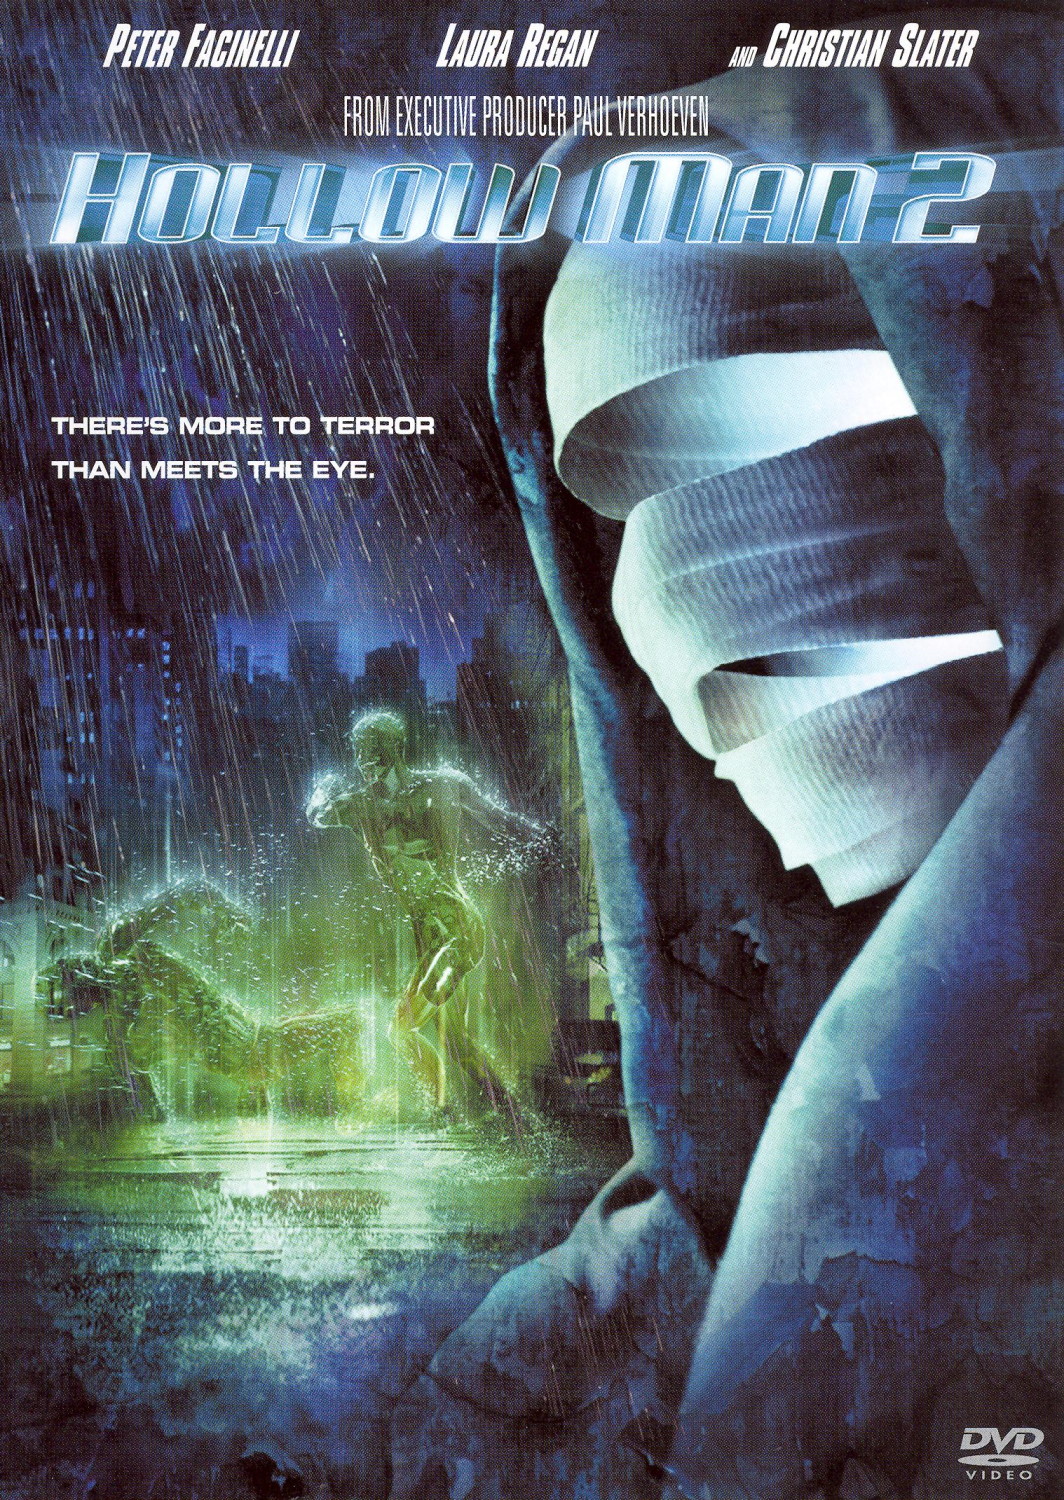 Hollow Man II (2006) Poster